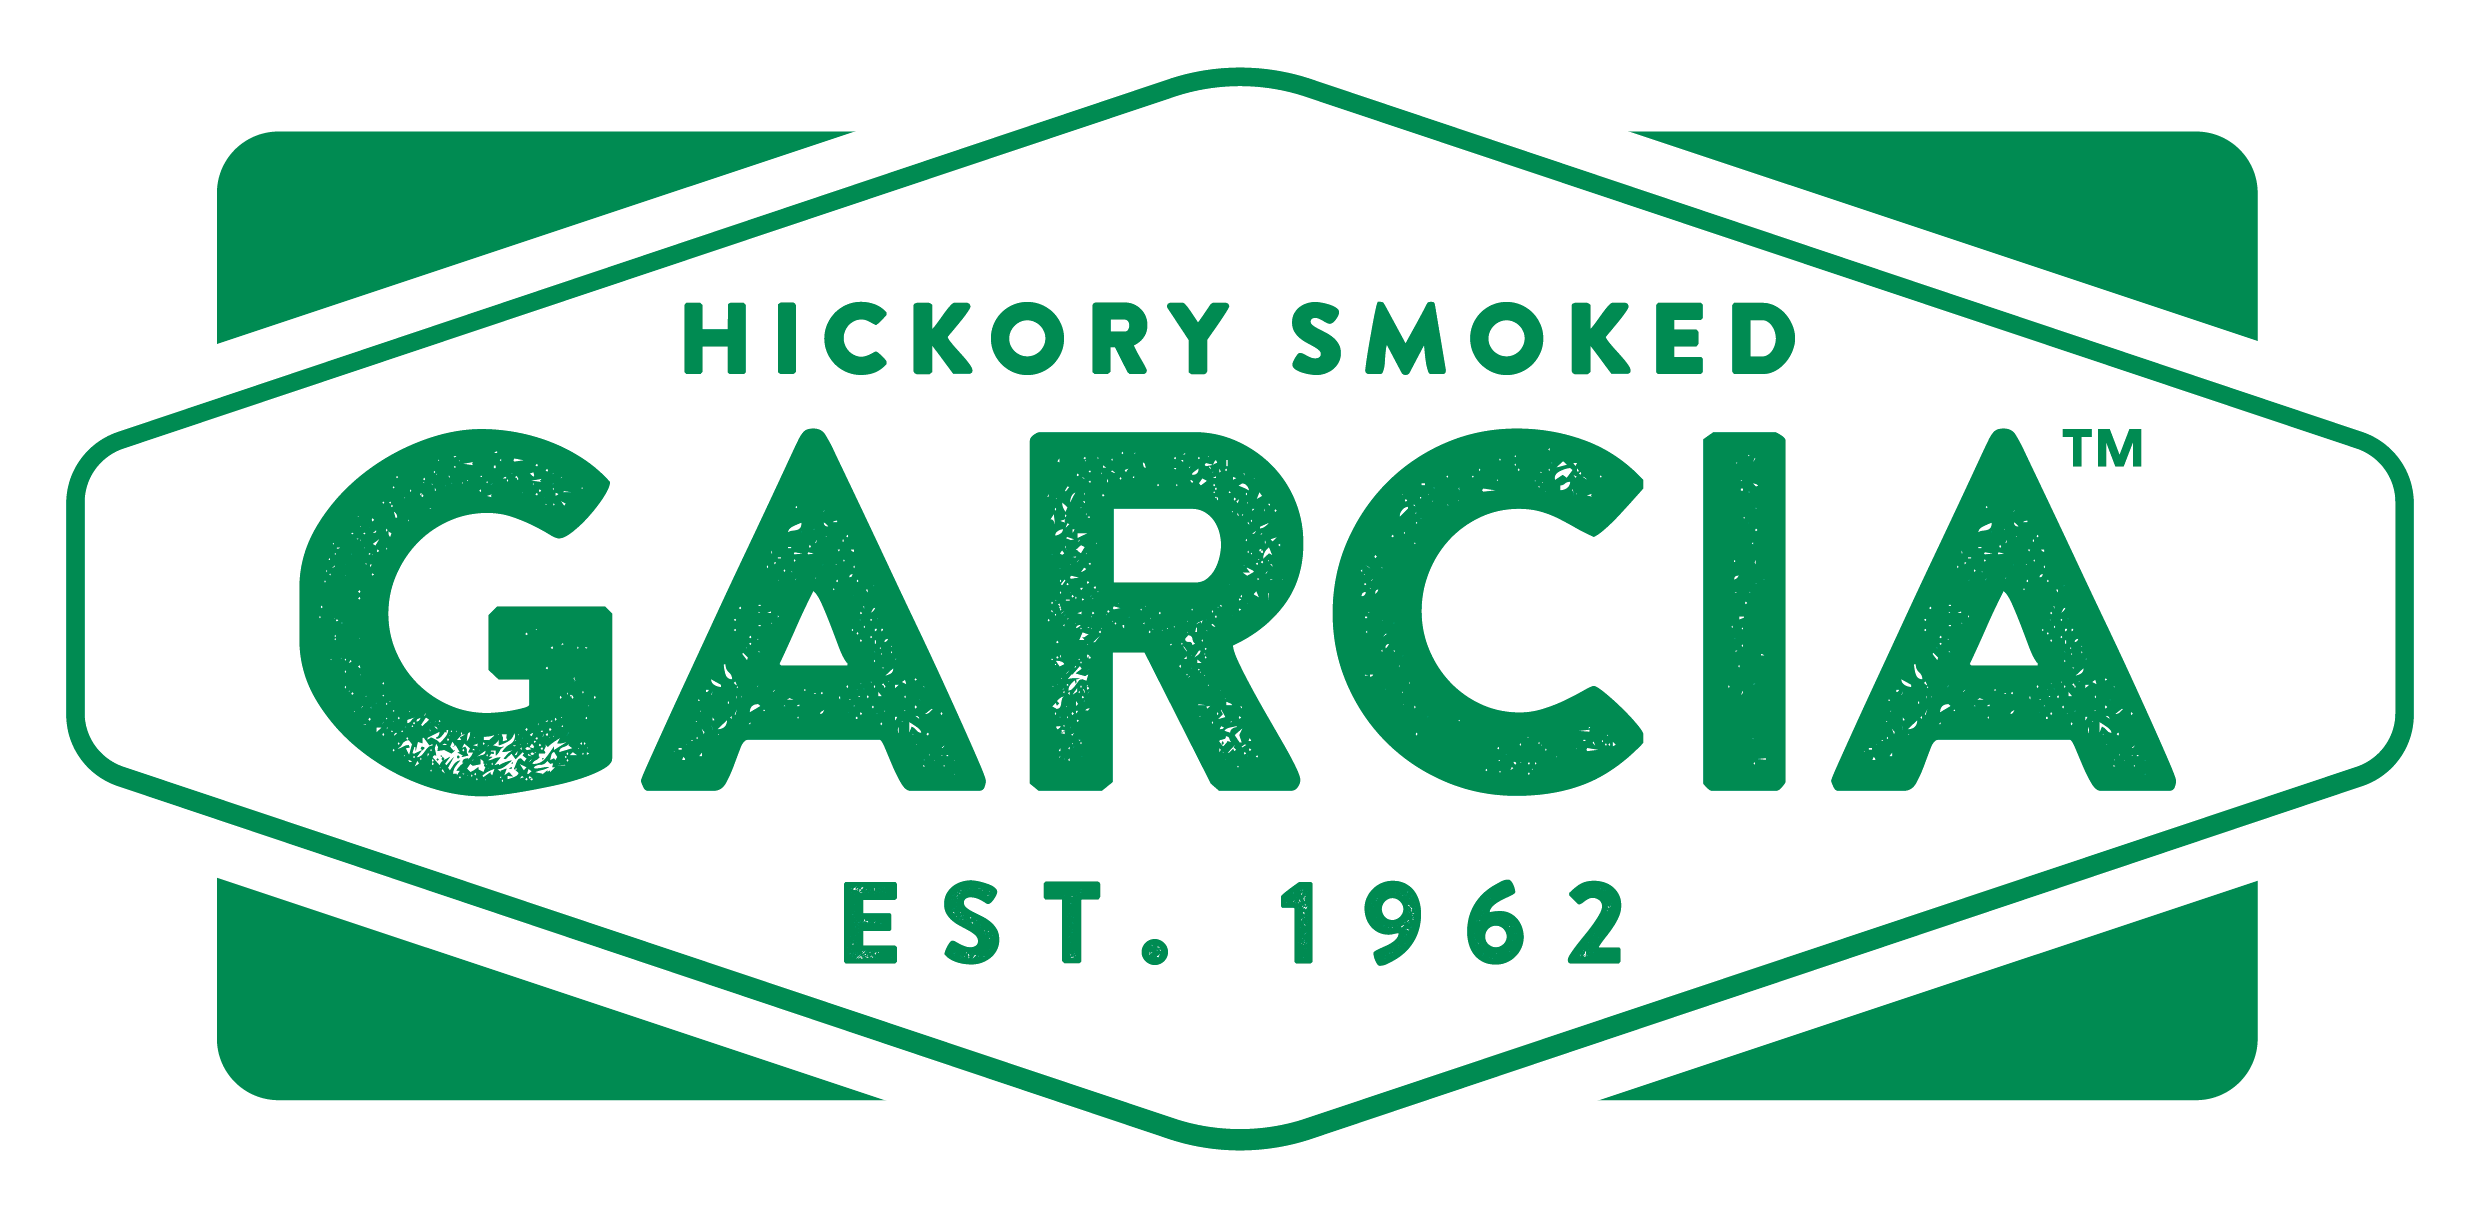 Garcia Smoked Sausage - Hickory Smoked Since 1962